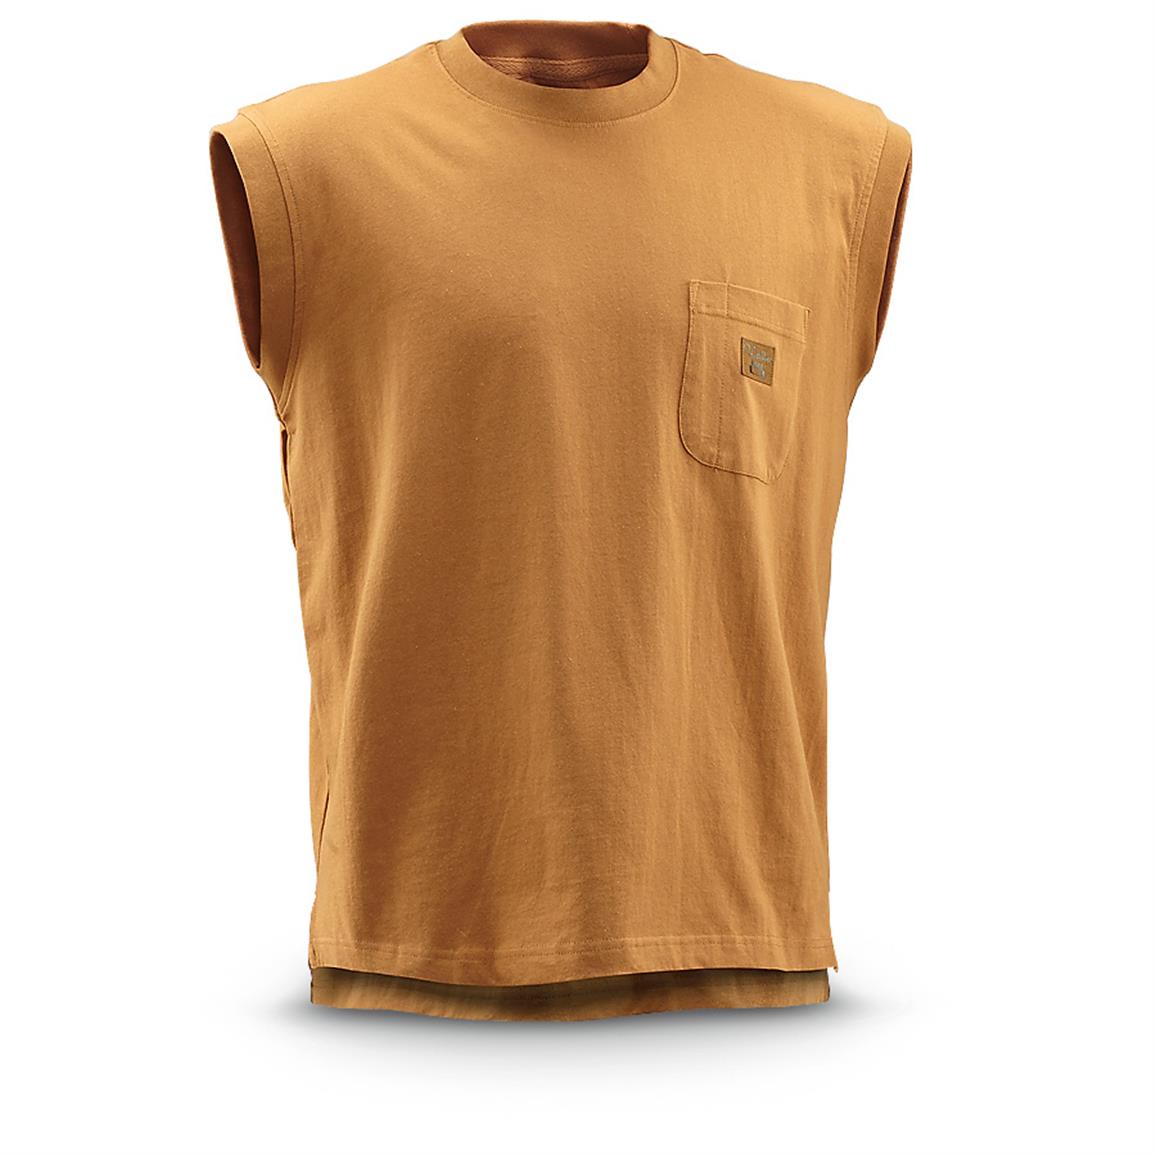 3-Pk. of Walls Sleeveless T-shirts - 610707, T-Shirts at Sportsman's Guide